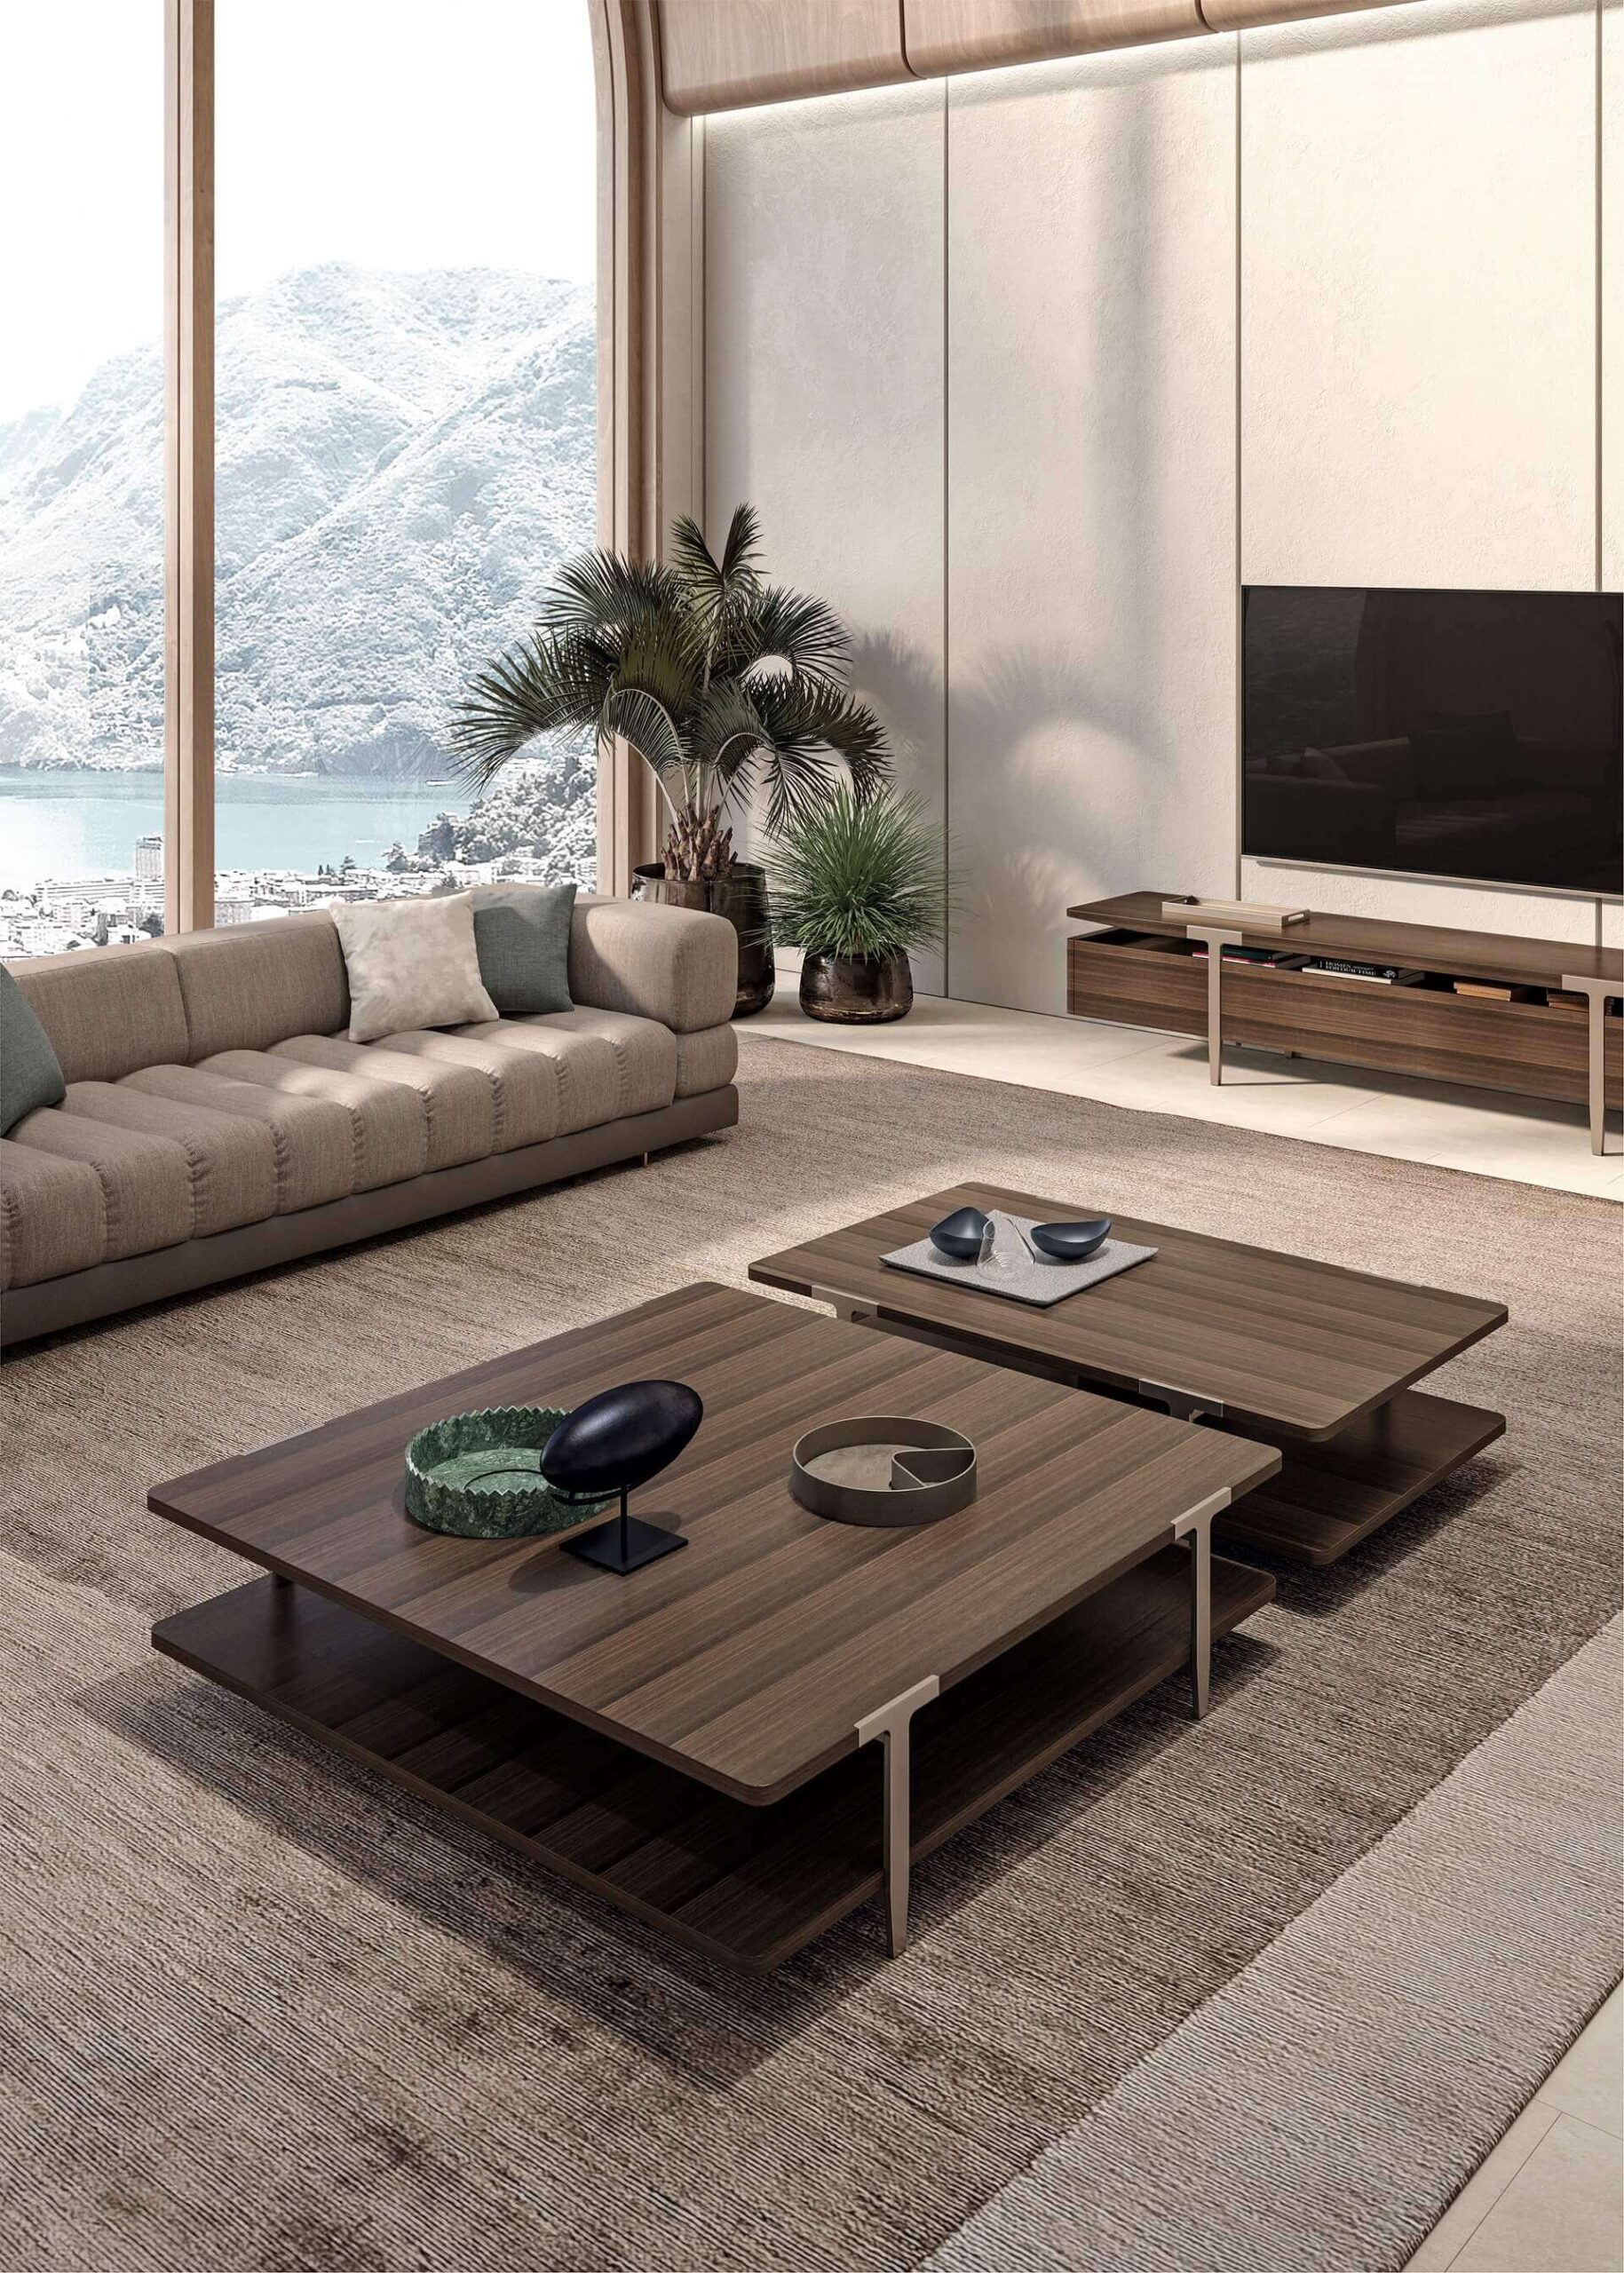 Turri_Domus living room